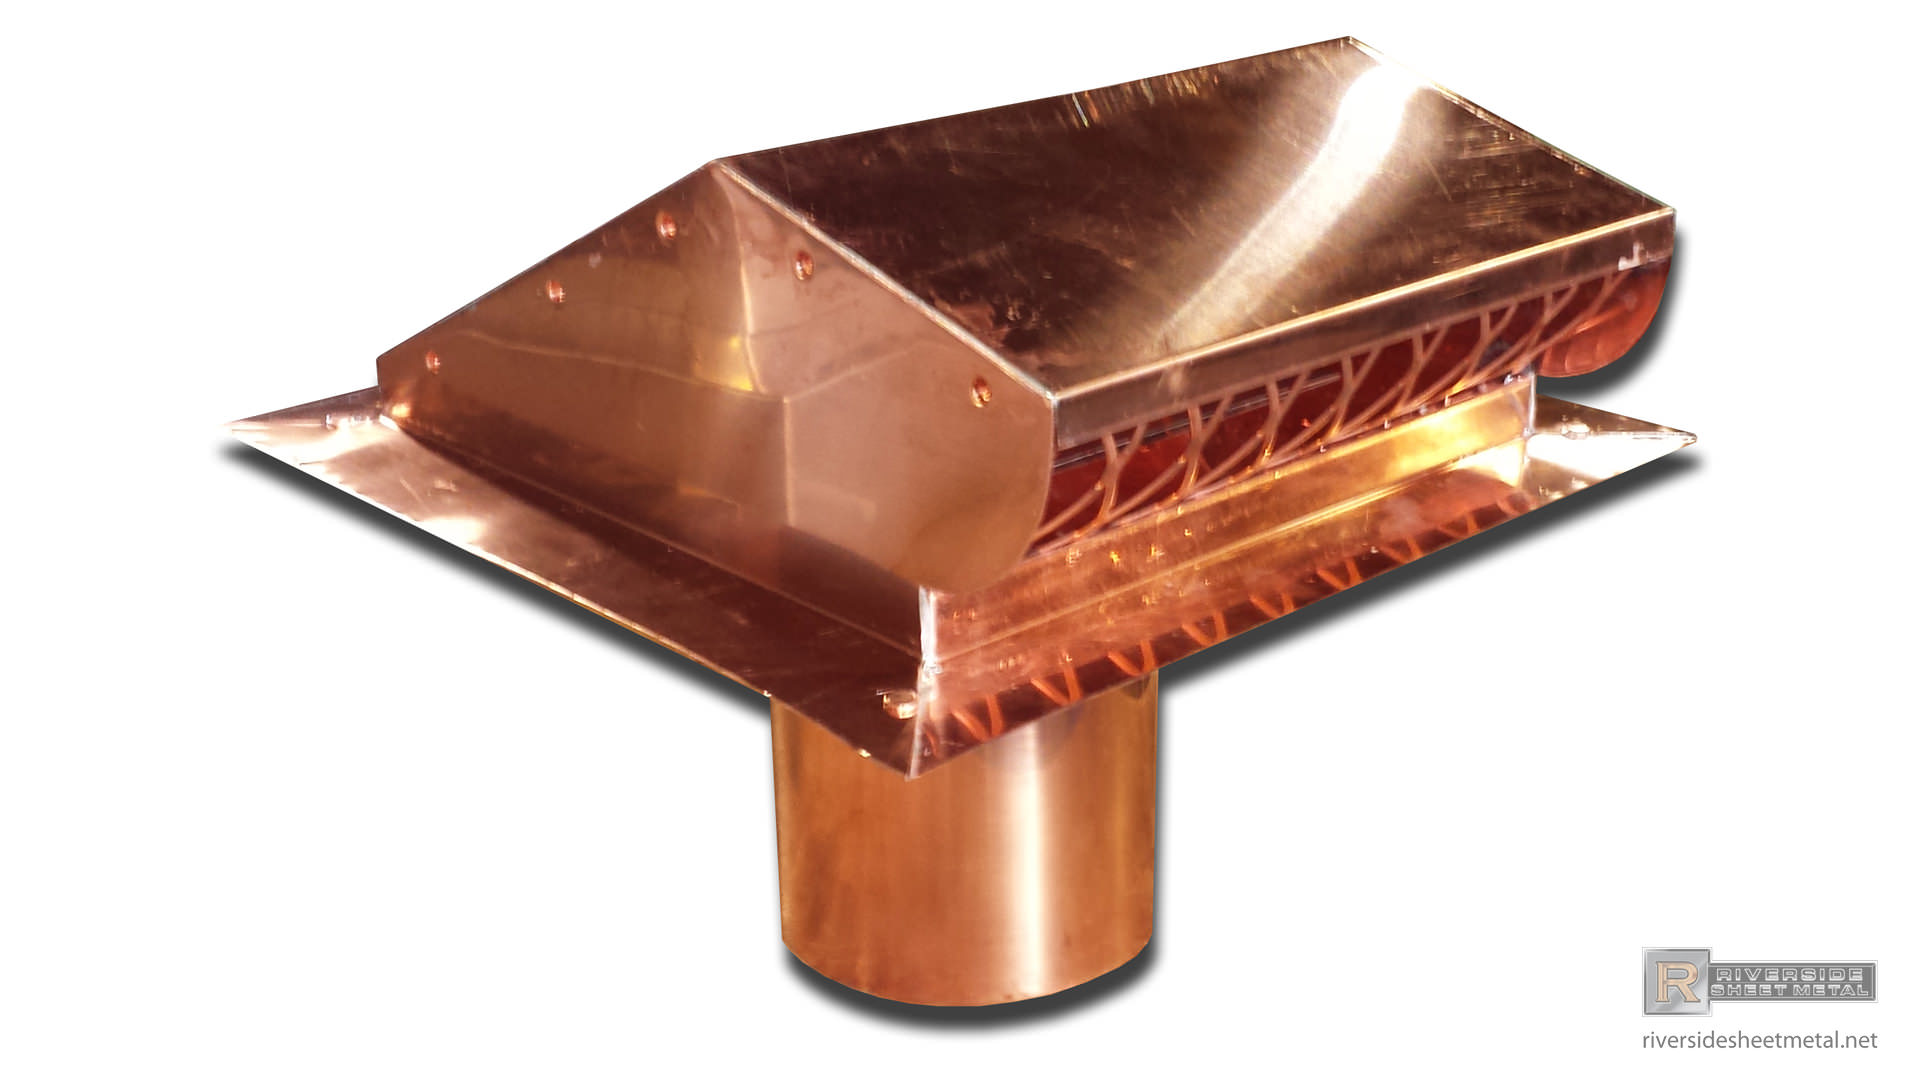 Copper Expanded Sheet Supply - Riverside Sheet Metal - Medford, MA